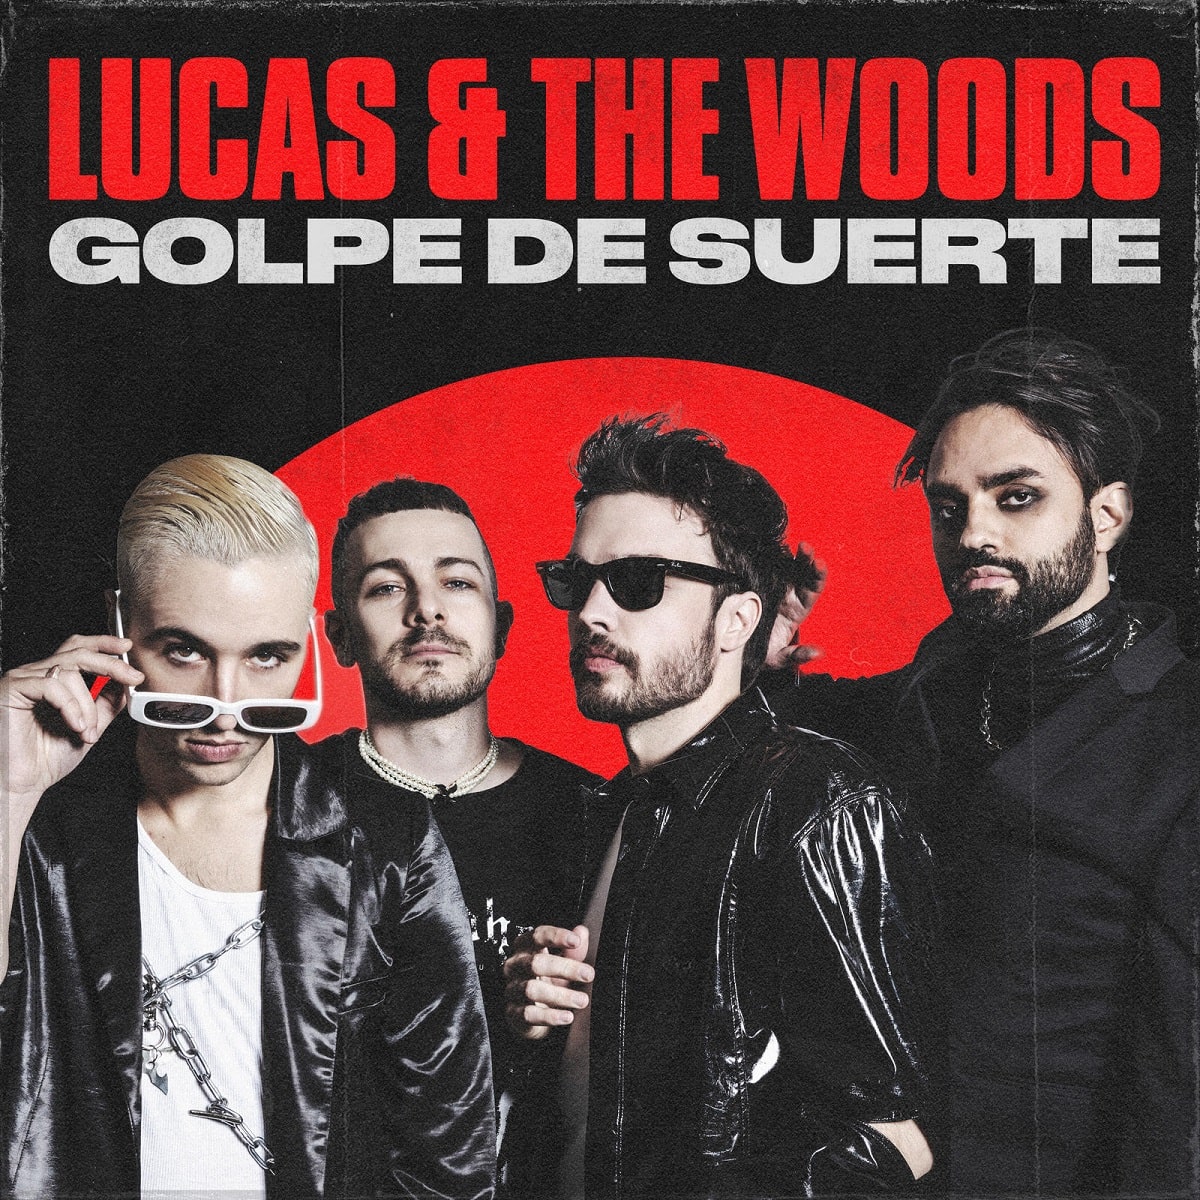 Lucas & The Woods lanza el EP Golpe de suerte.